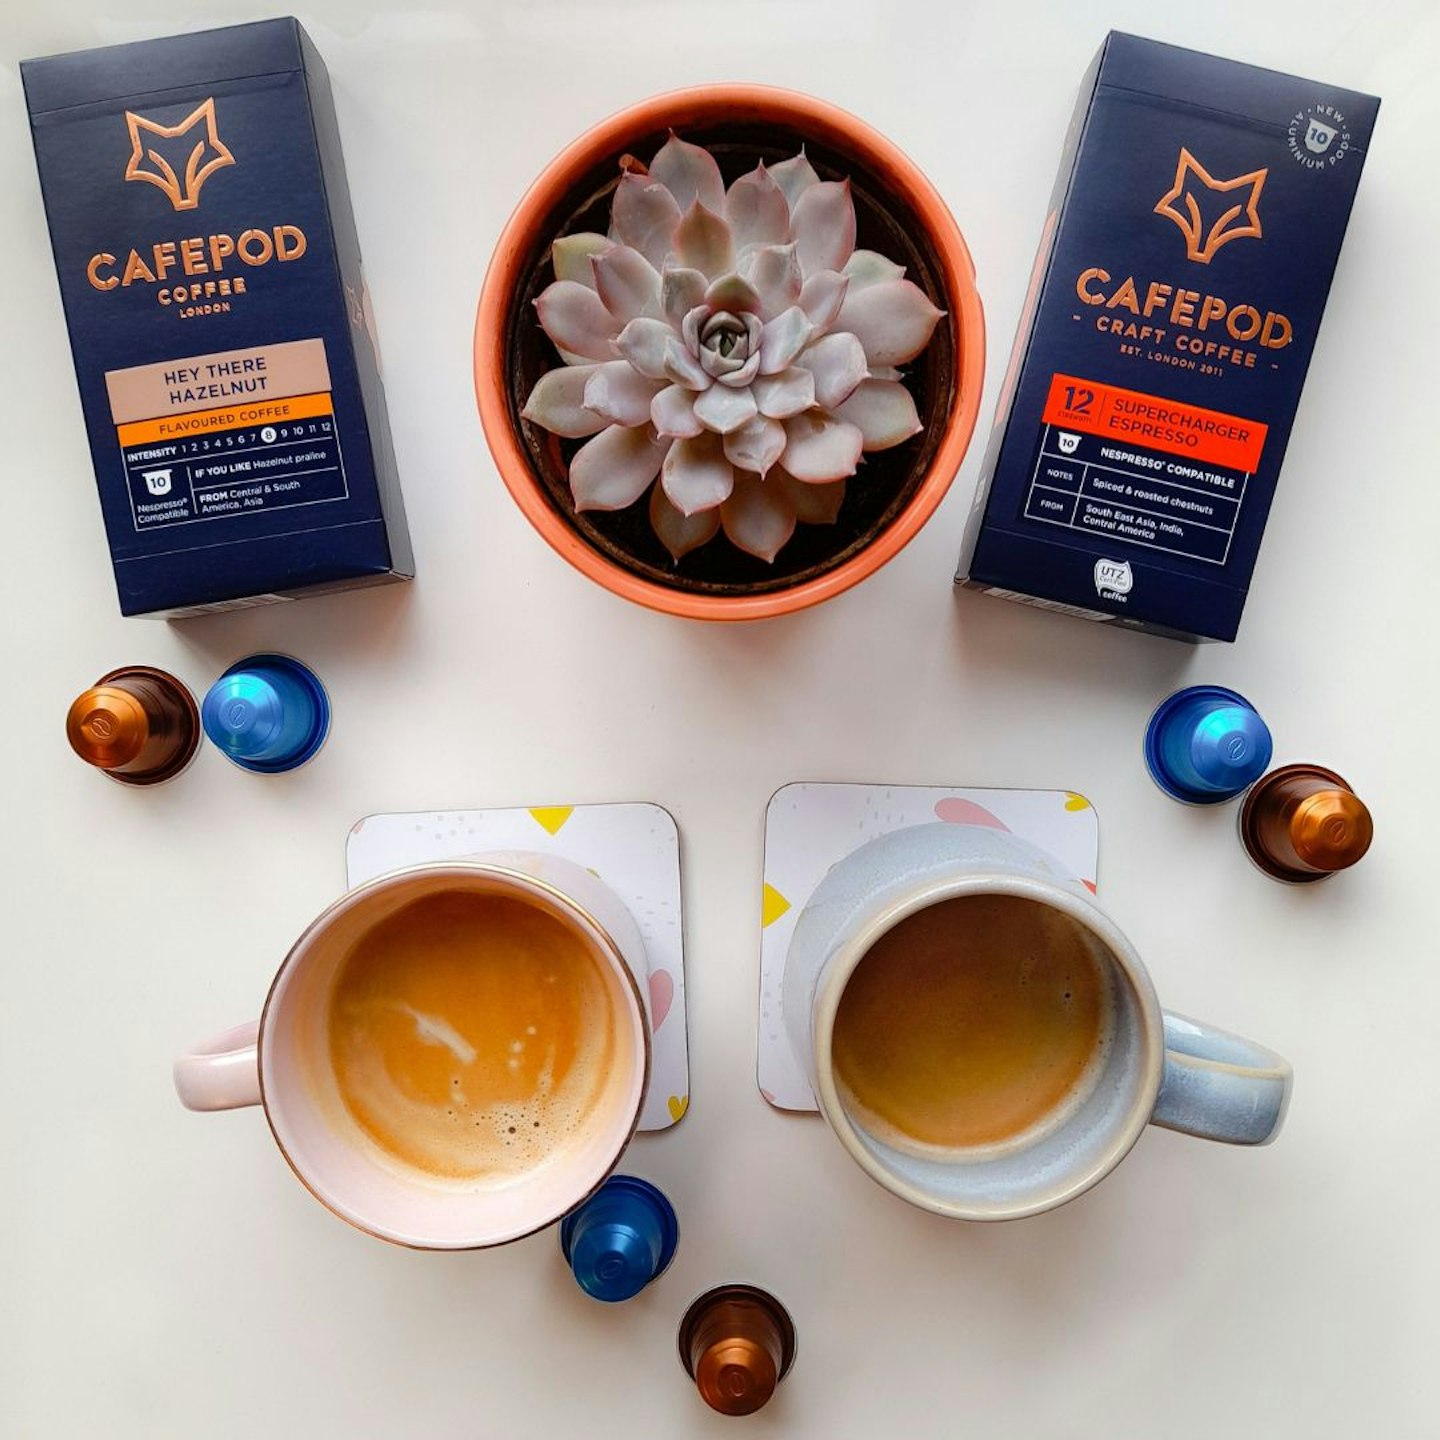 CafePod coffee capsules